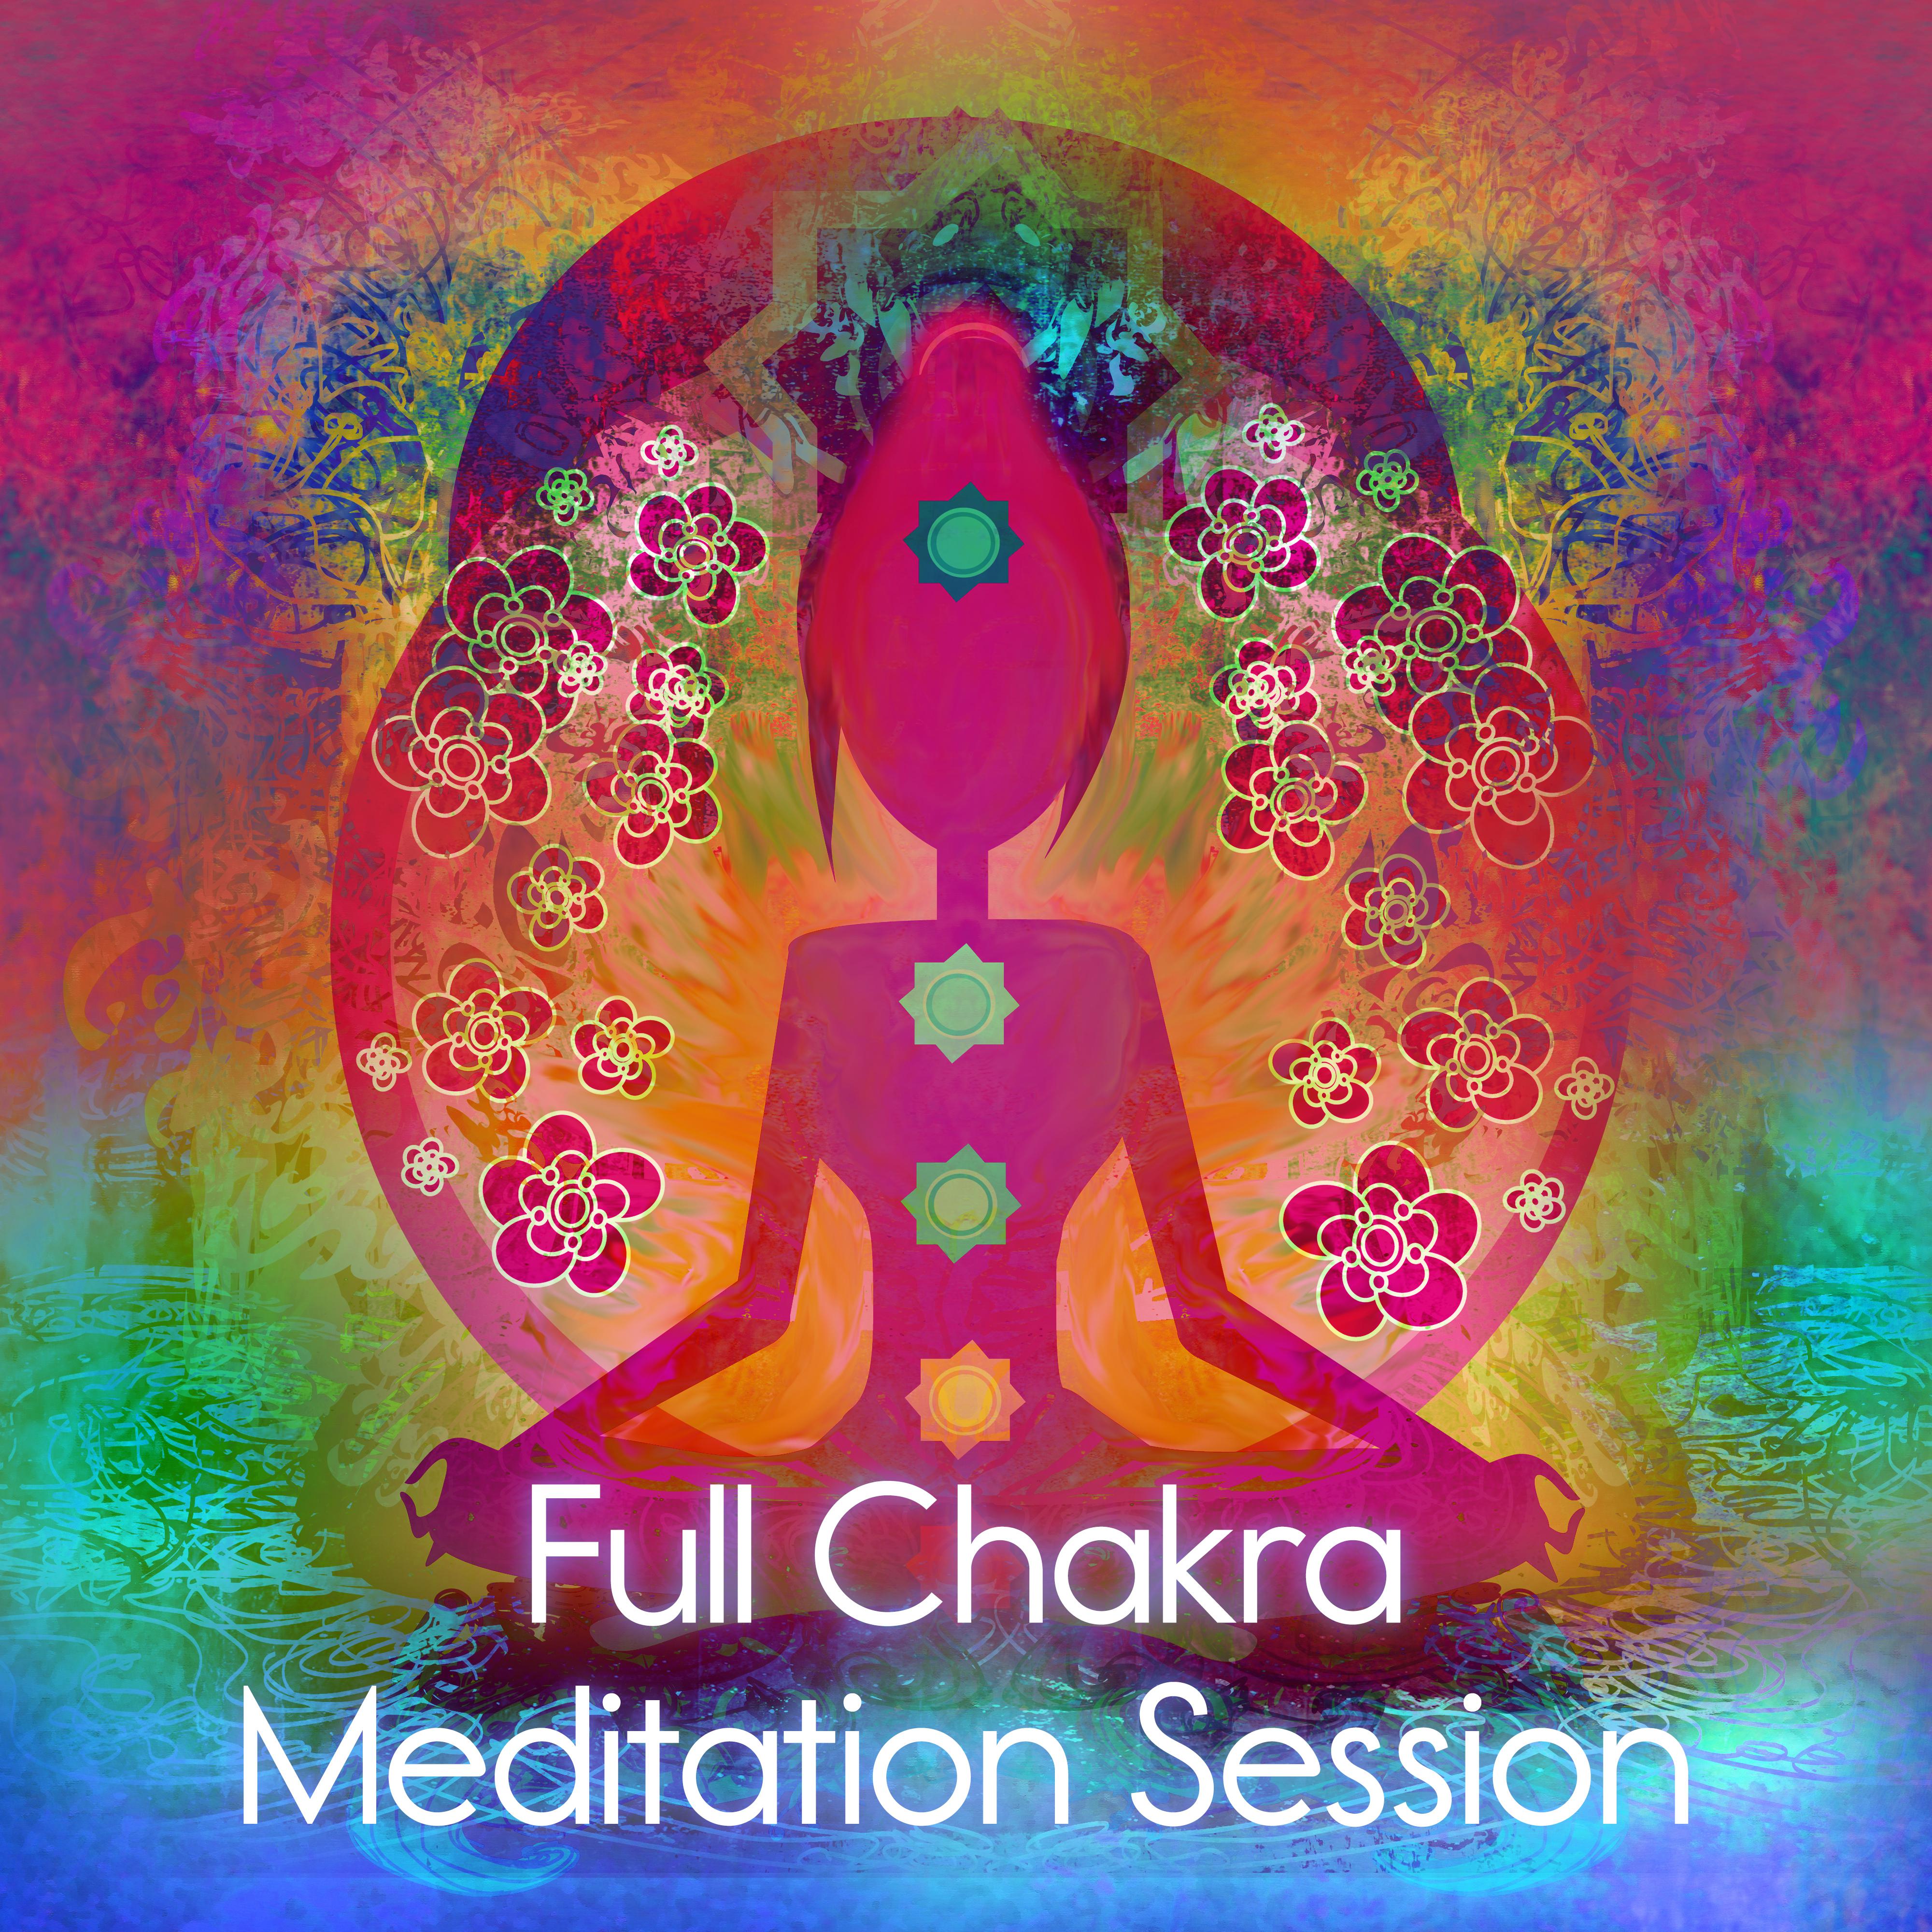 Full Chakra Meditation Session  Music for Mindfulness Yoga Time, Calming Body  Soul